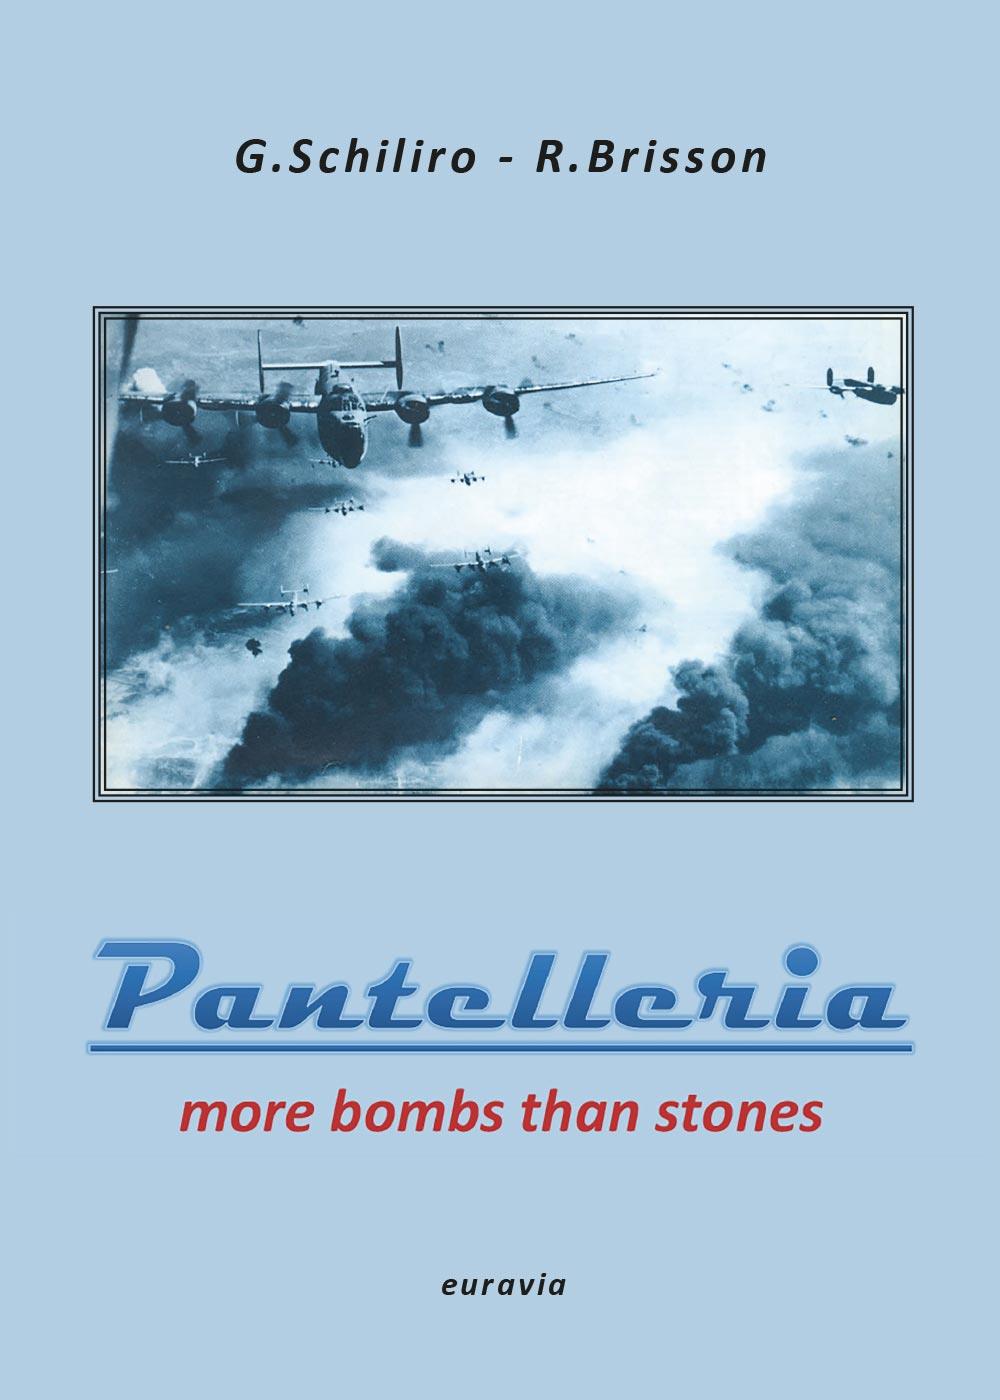 PANTELLERIA - More bombs than stones